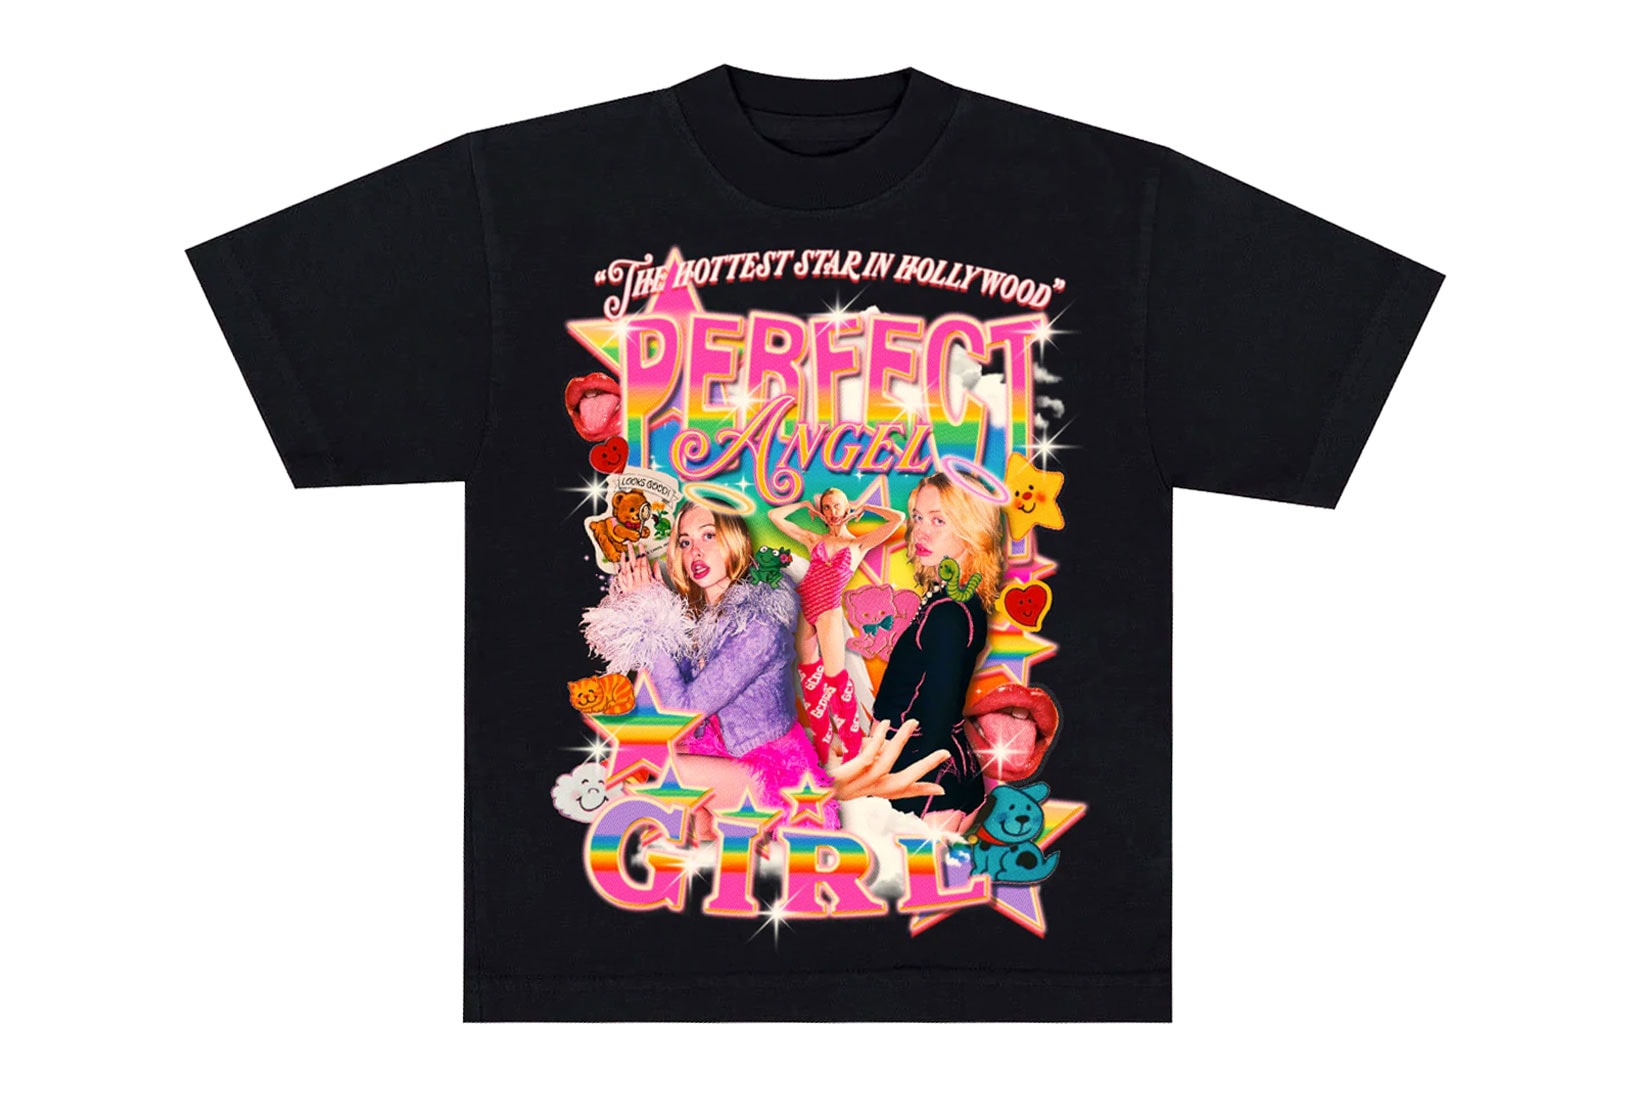 Chloe Cherry Euphoria Merch Perfect Angel Girl T-Shirt Release